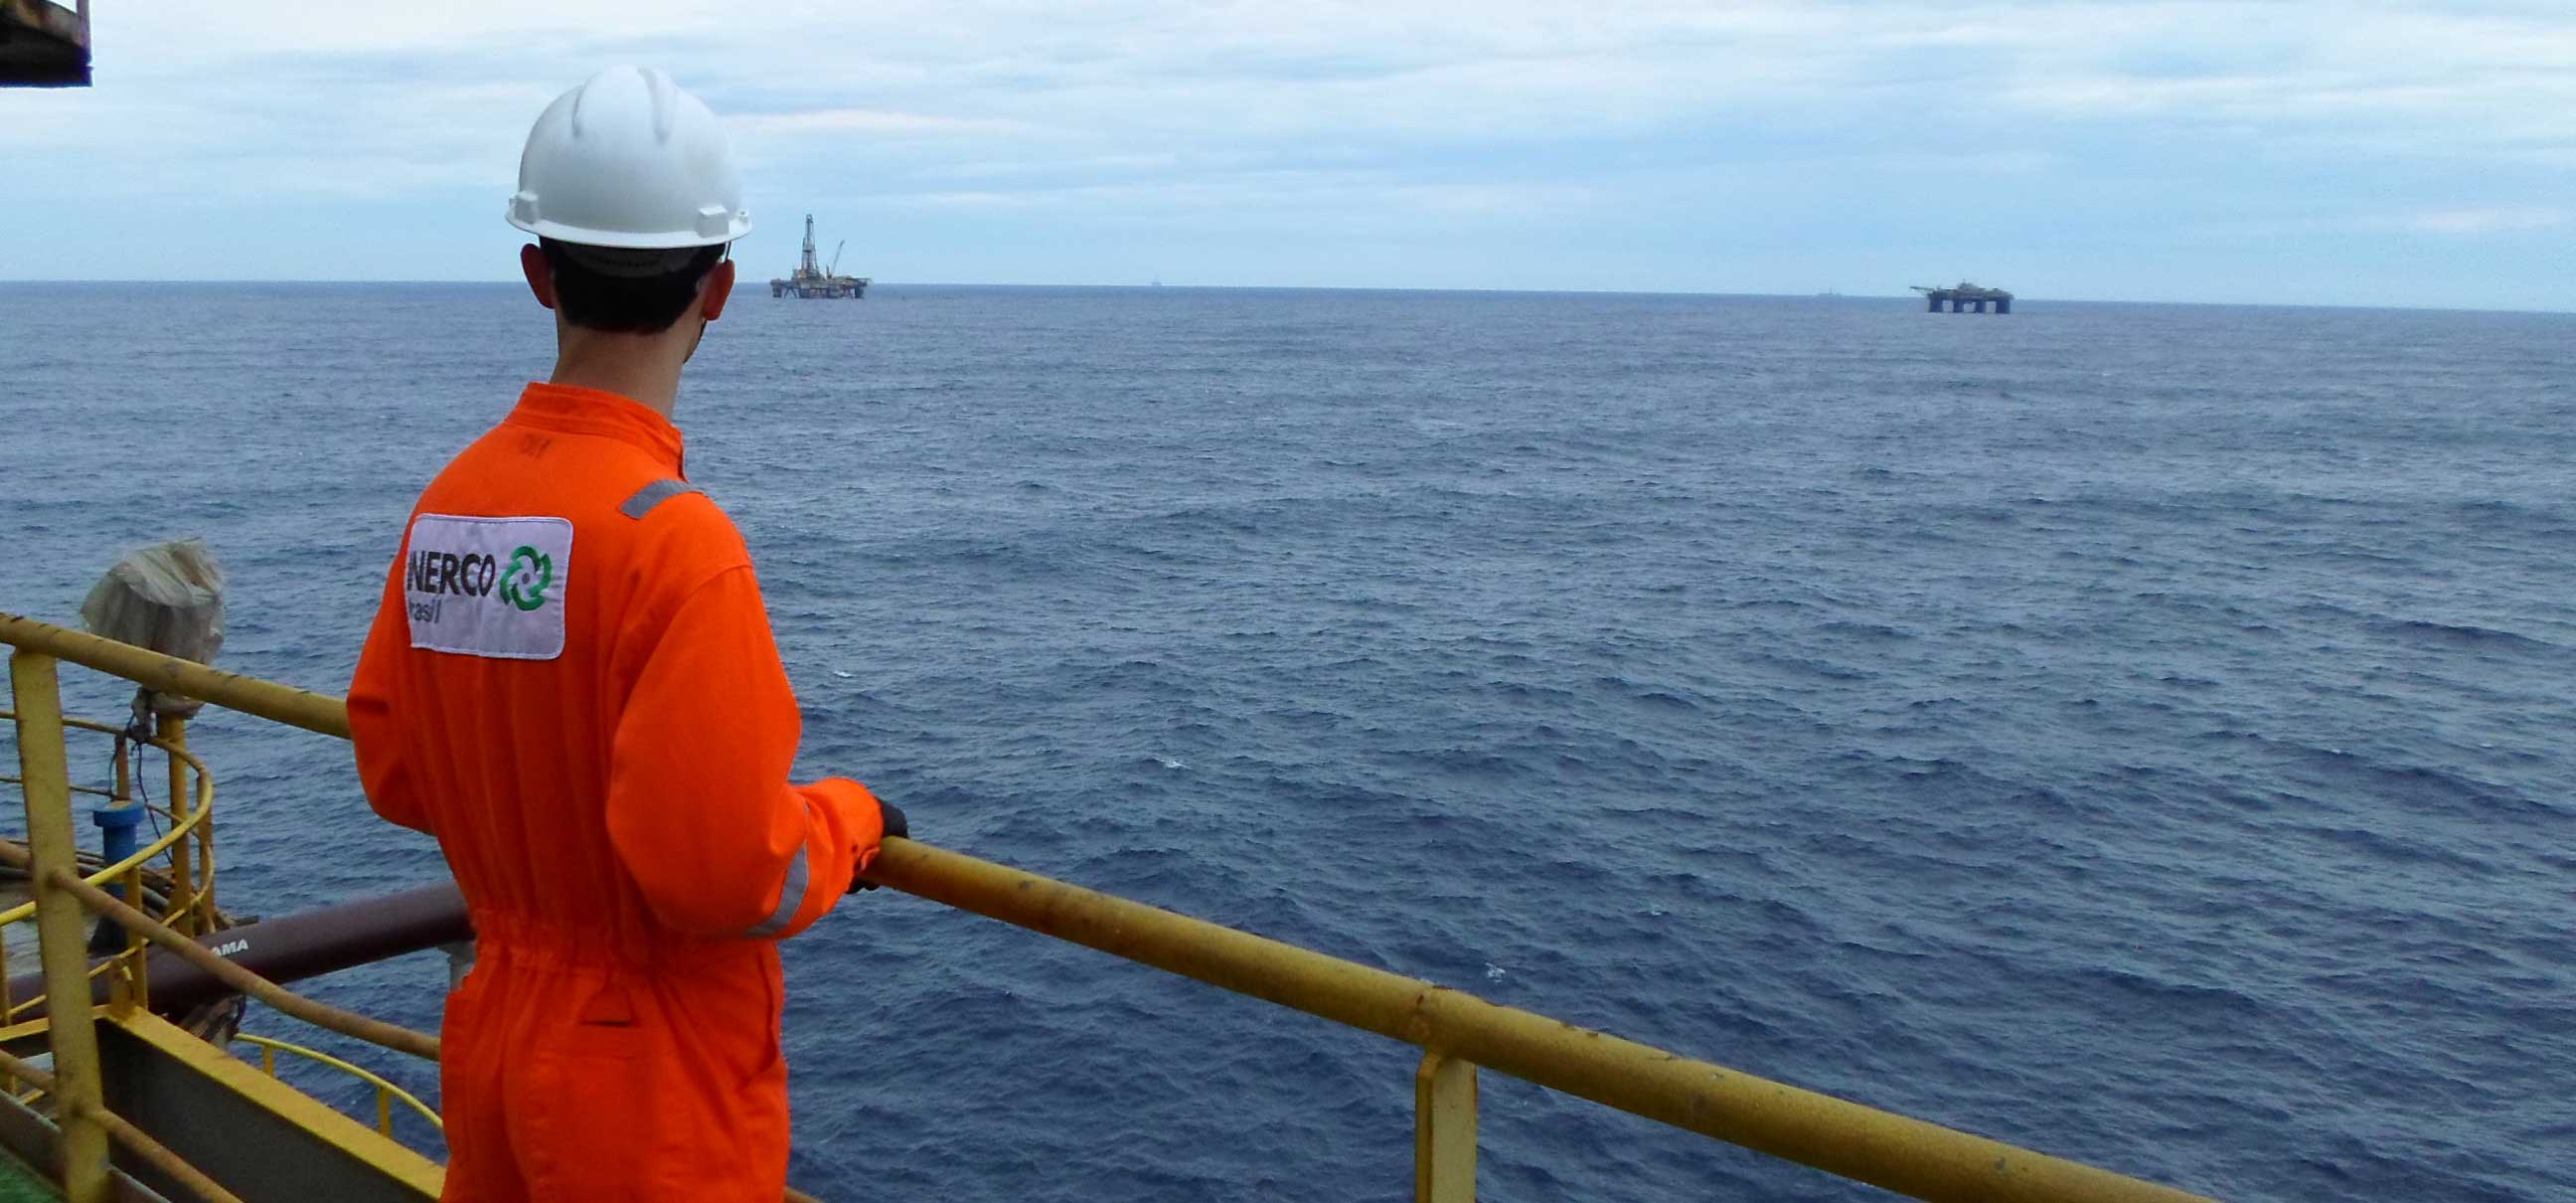 inerco-brasil-petrobras-HSE-offshore-oilgas